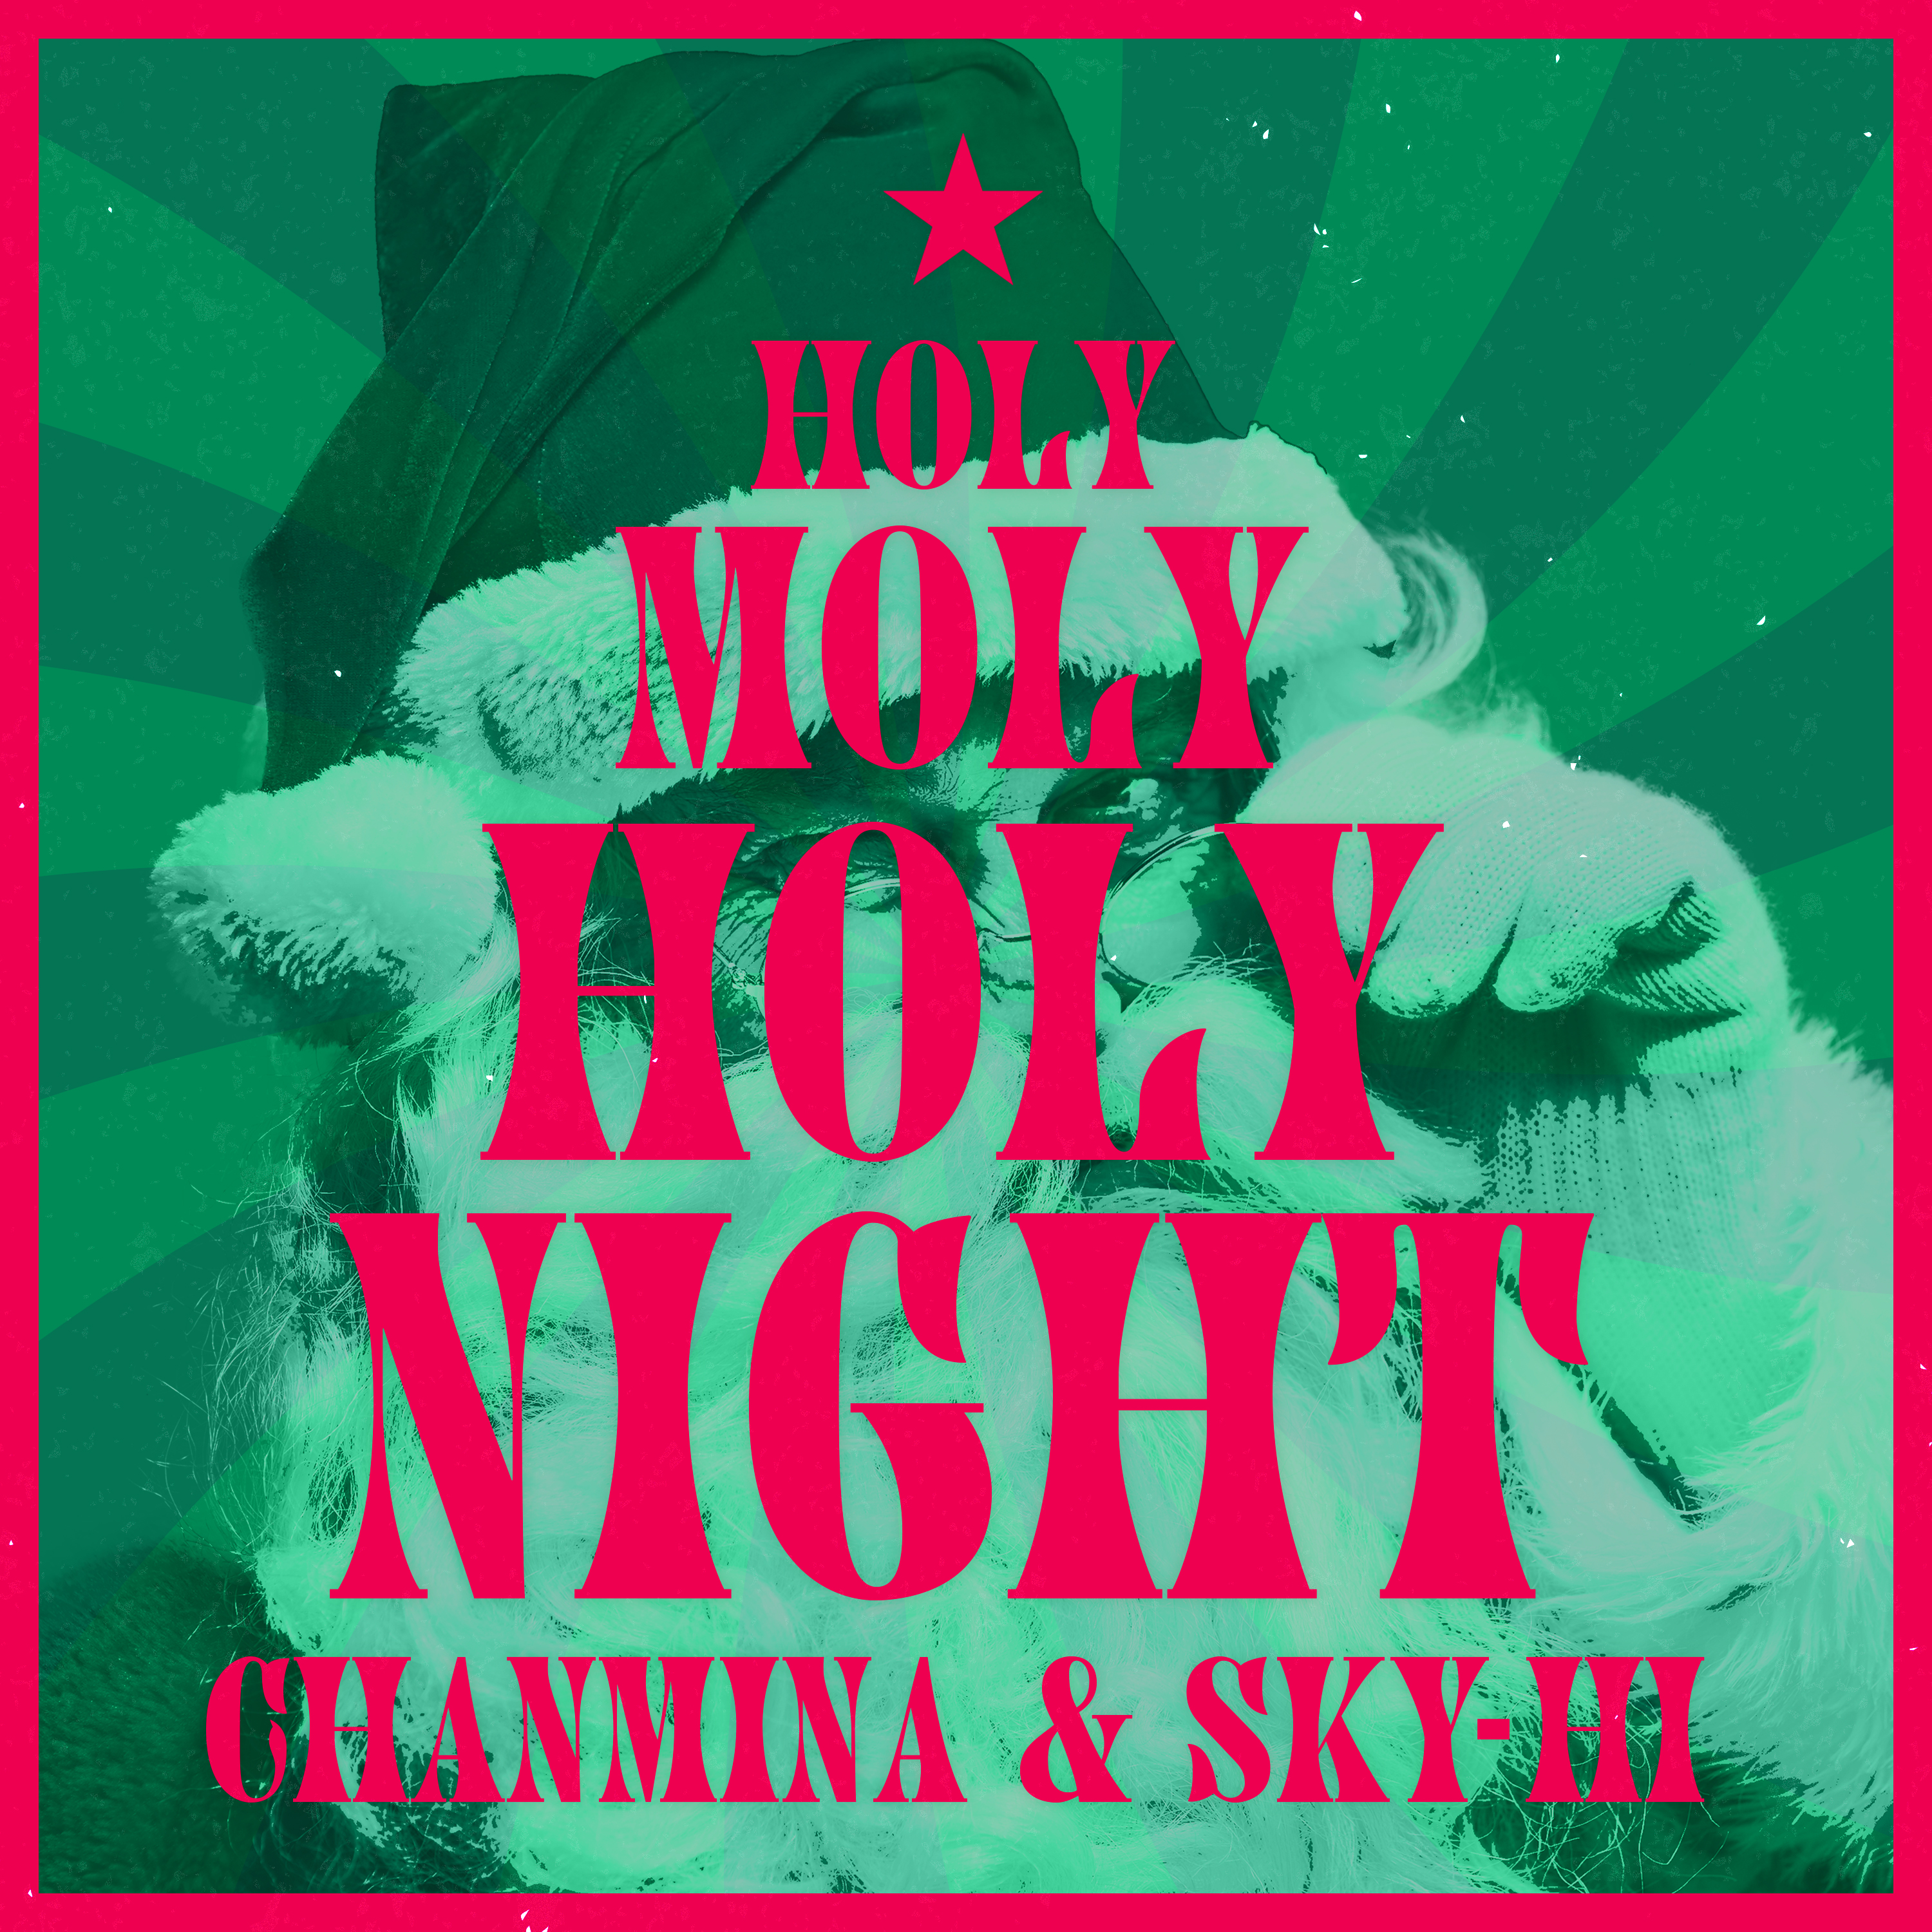 Holy Moly Holy Night / ちゃんみな&SKY-HI